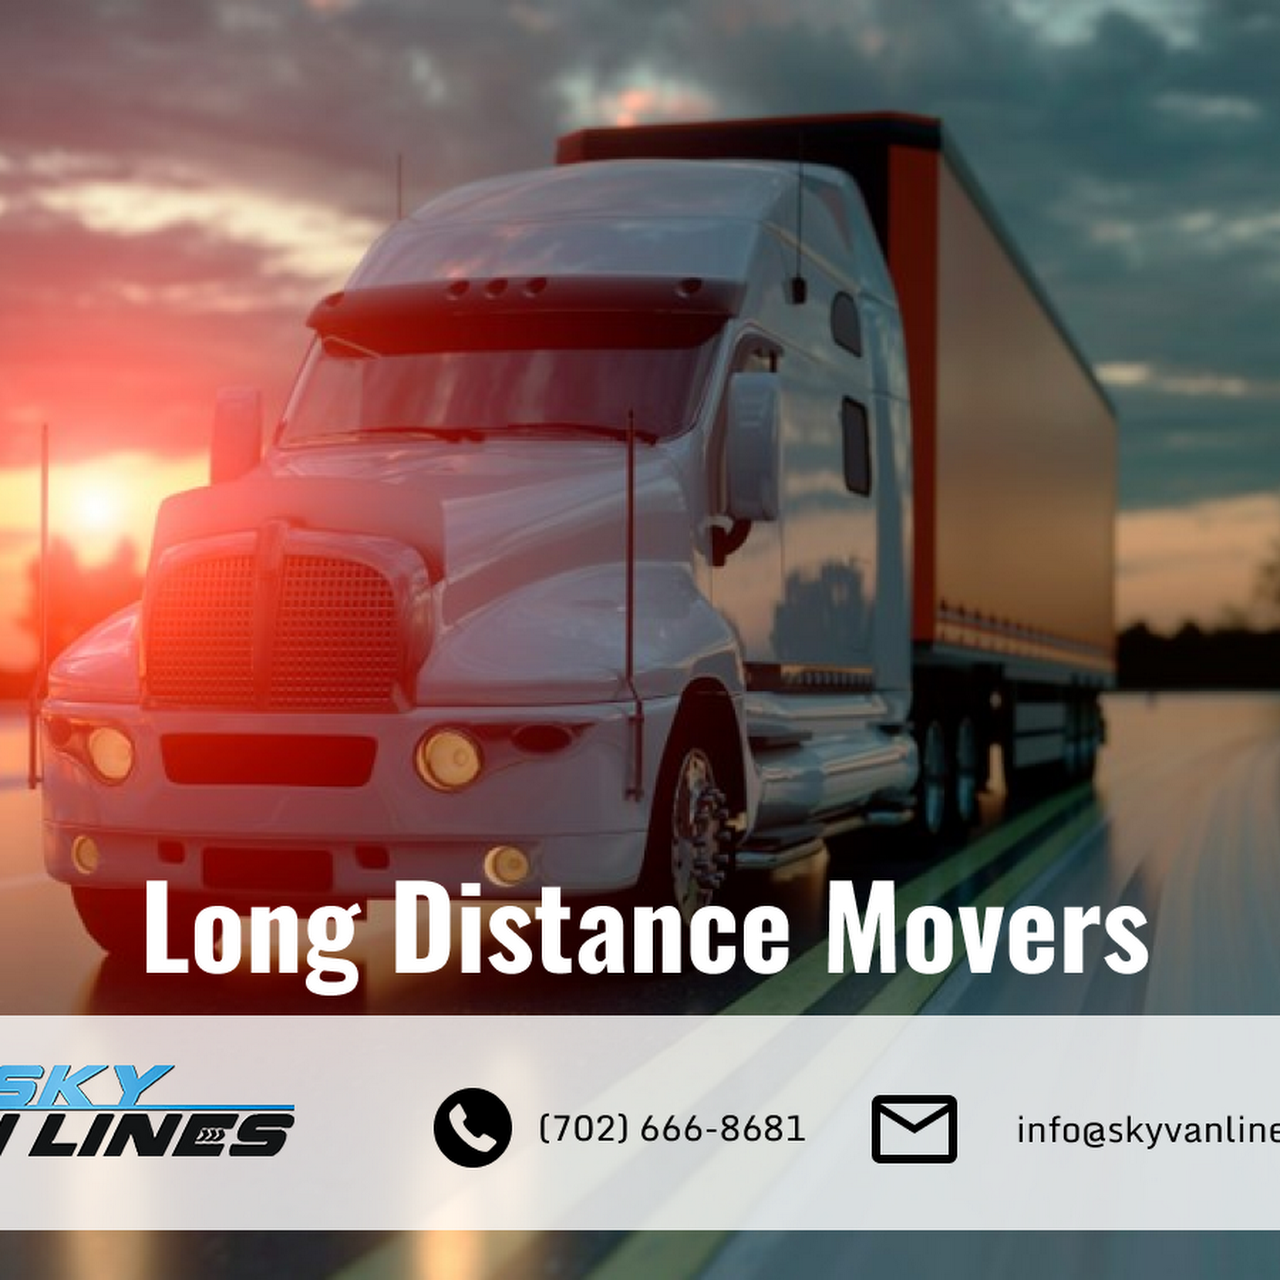 Long Distance Movers Las Vegas, NV